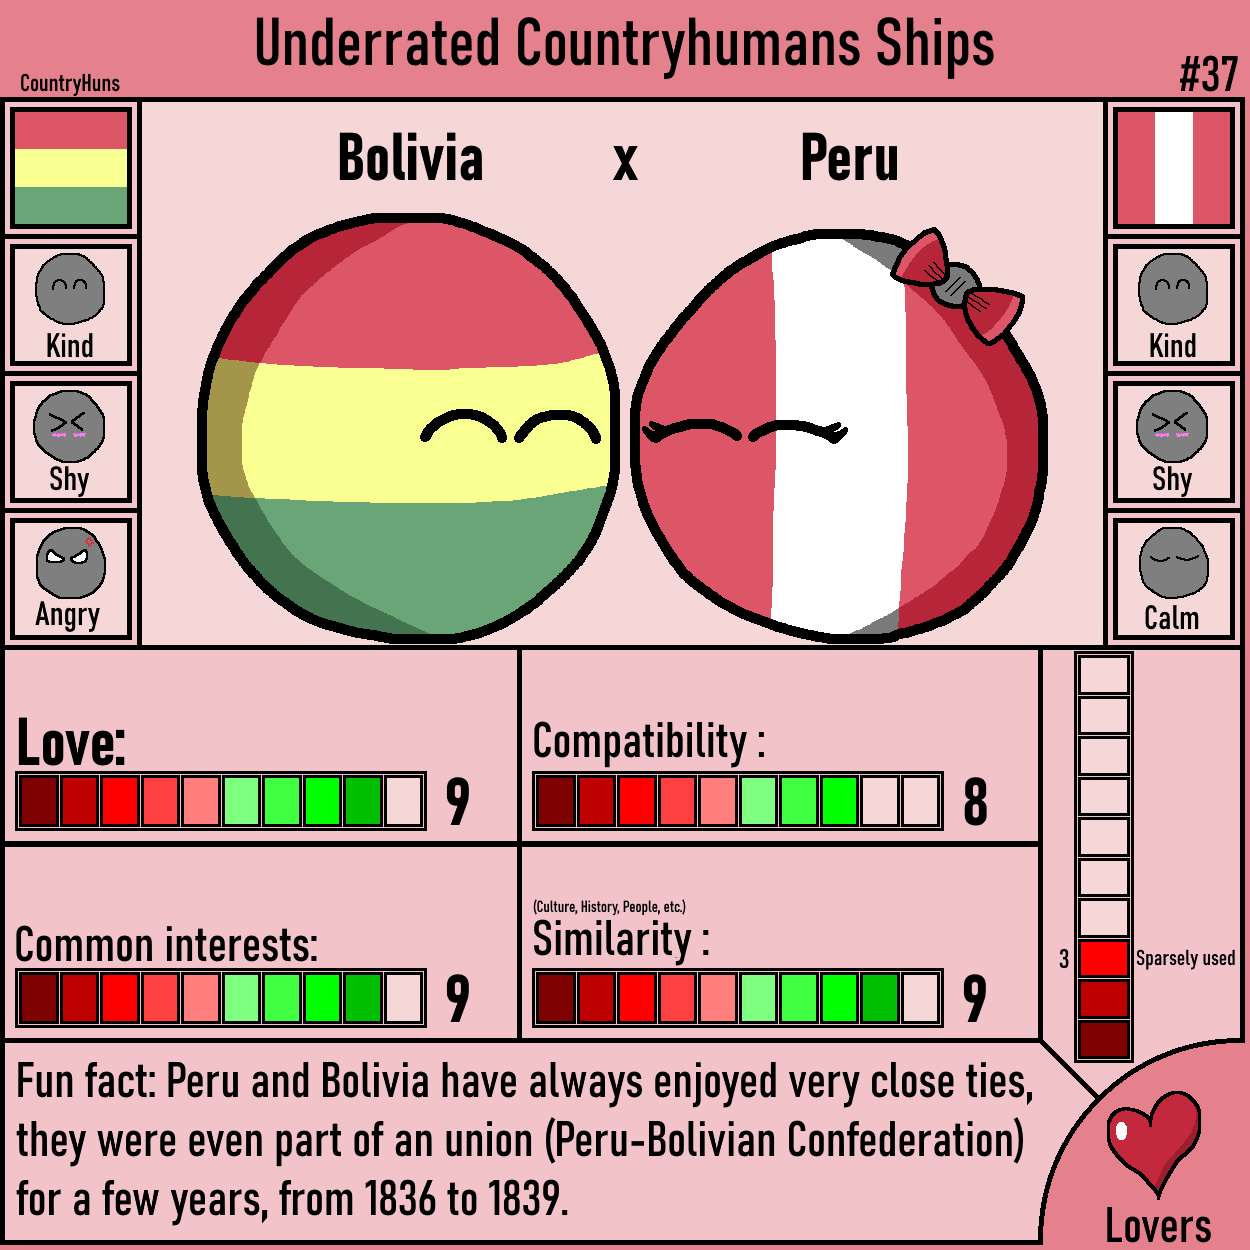 Countryhumans Ships